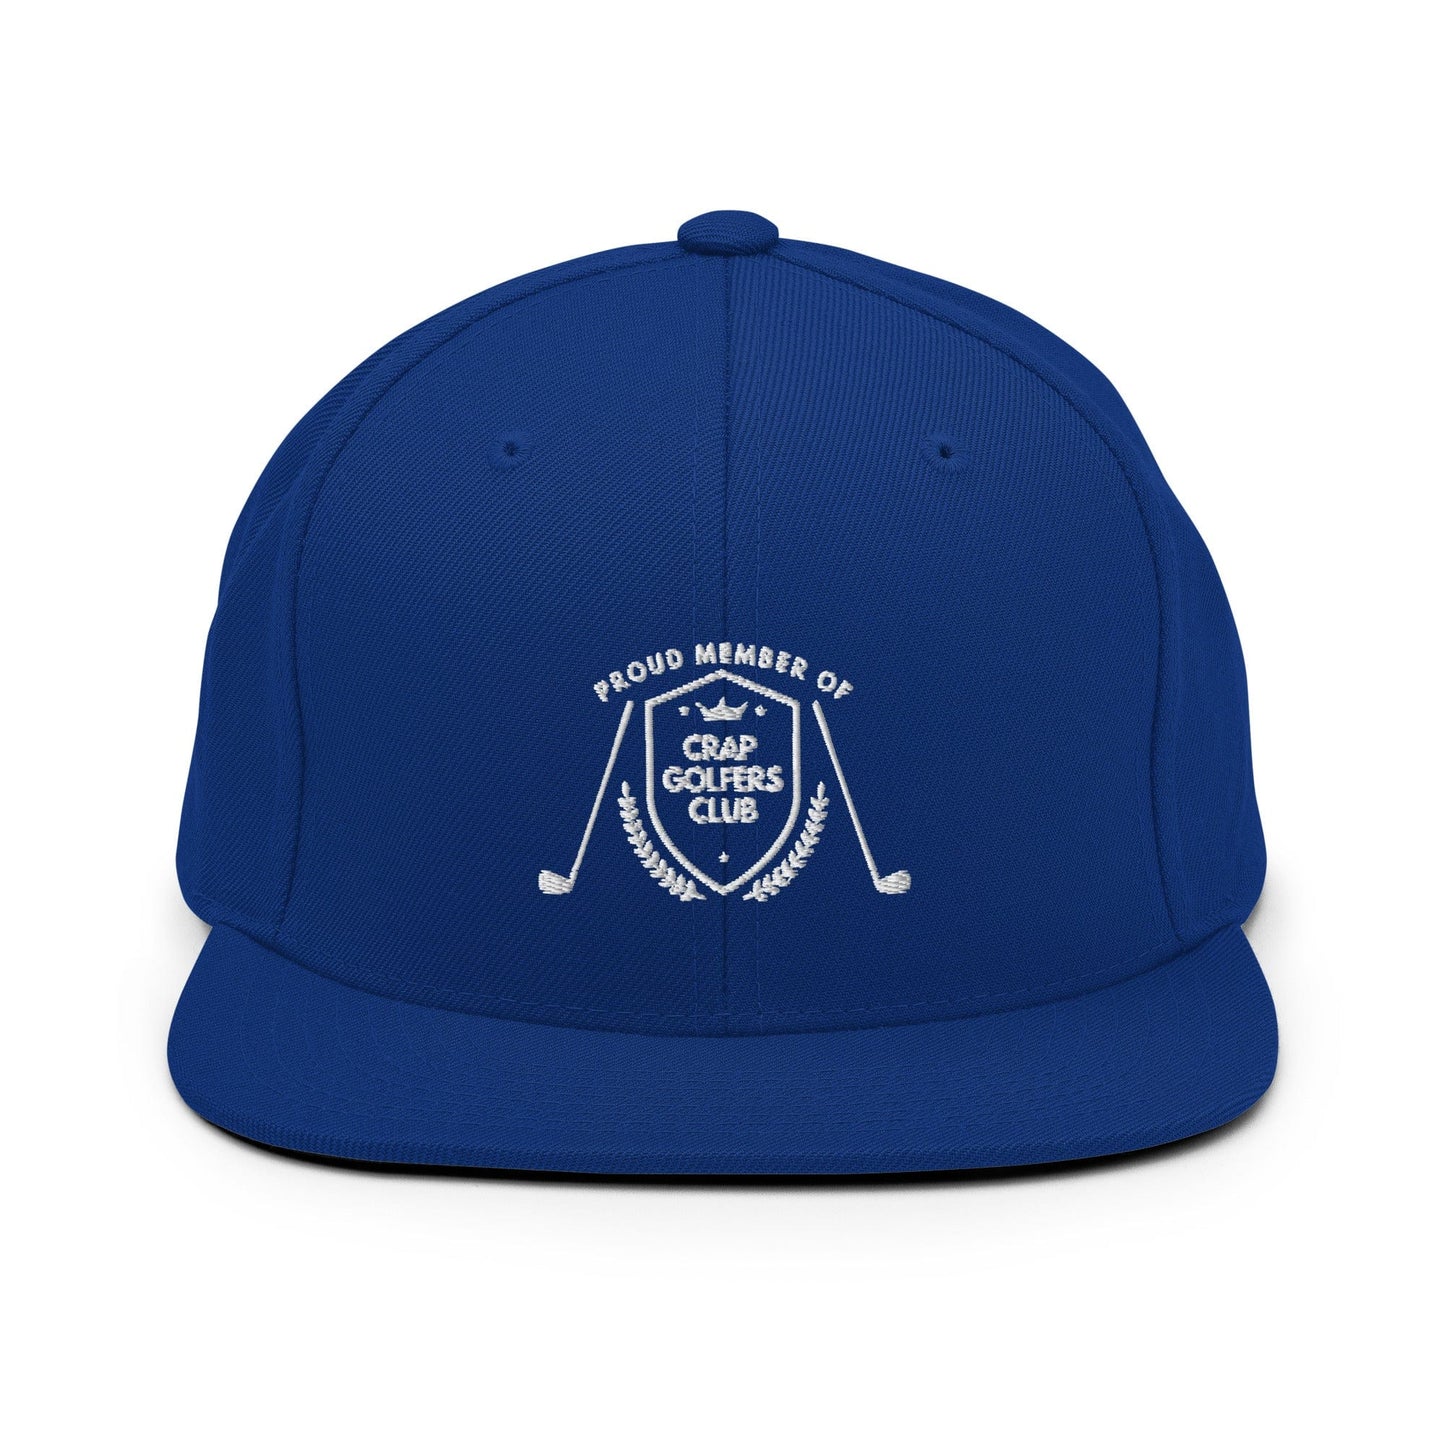 Funny Golfer Gifts  Snapback Hat Royal Blue Crap Golfers Club Snapback Hat